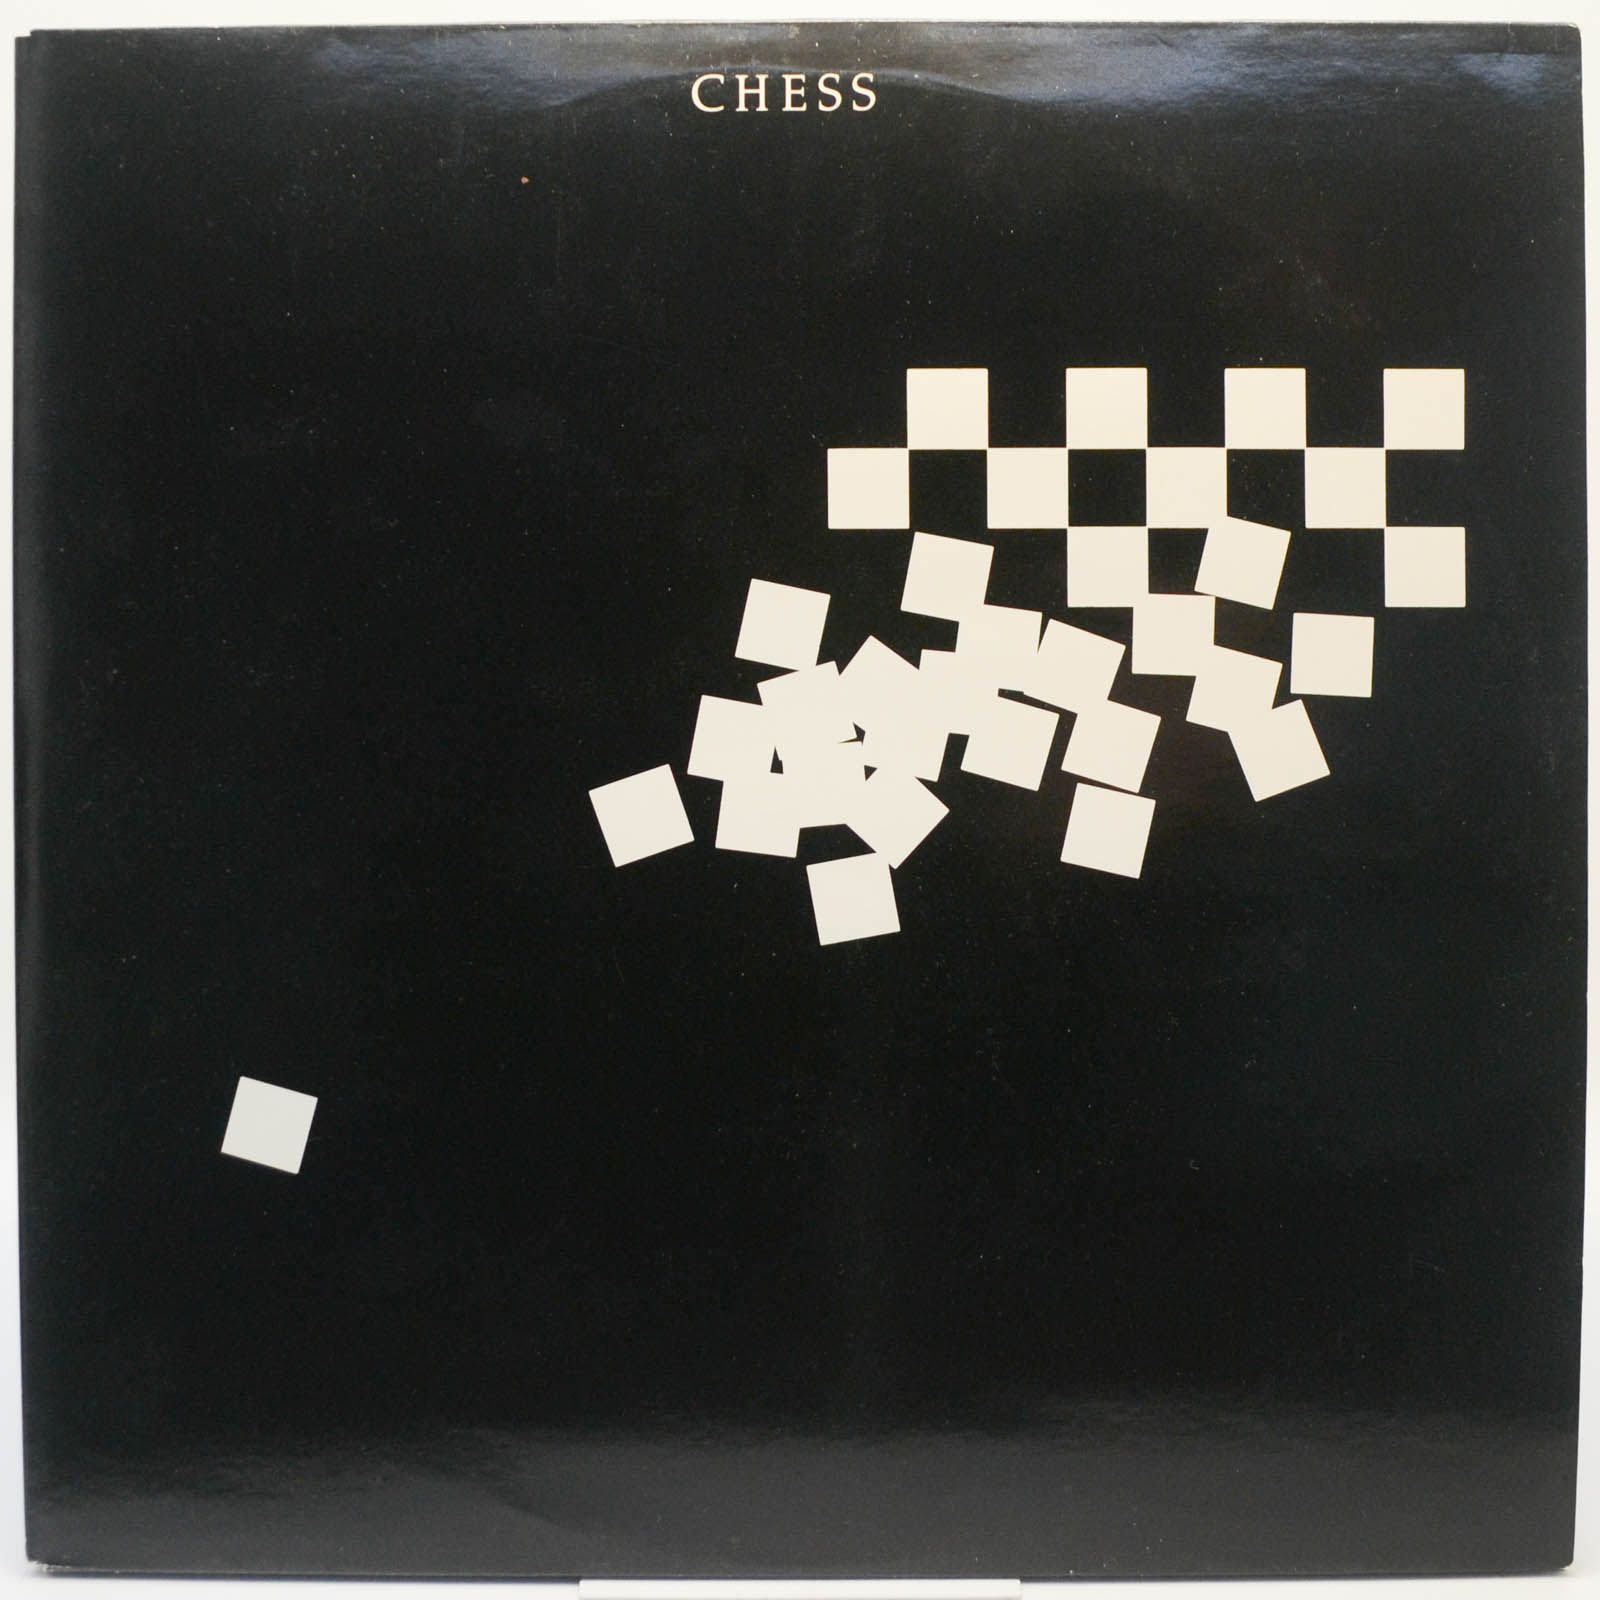 Benny Andersson · Tim Rice · Björn Ulvaeus — Chess (2LP, 1-st, Sweden), 1984